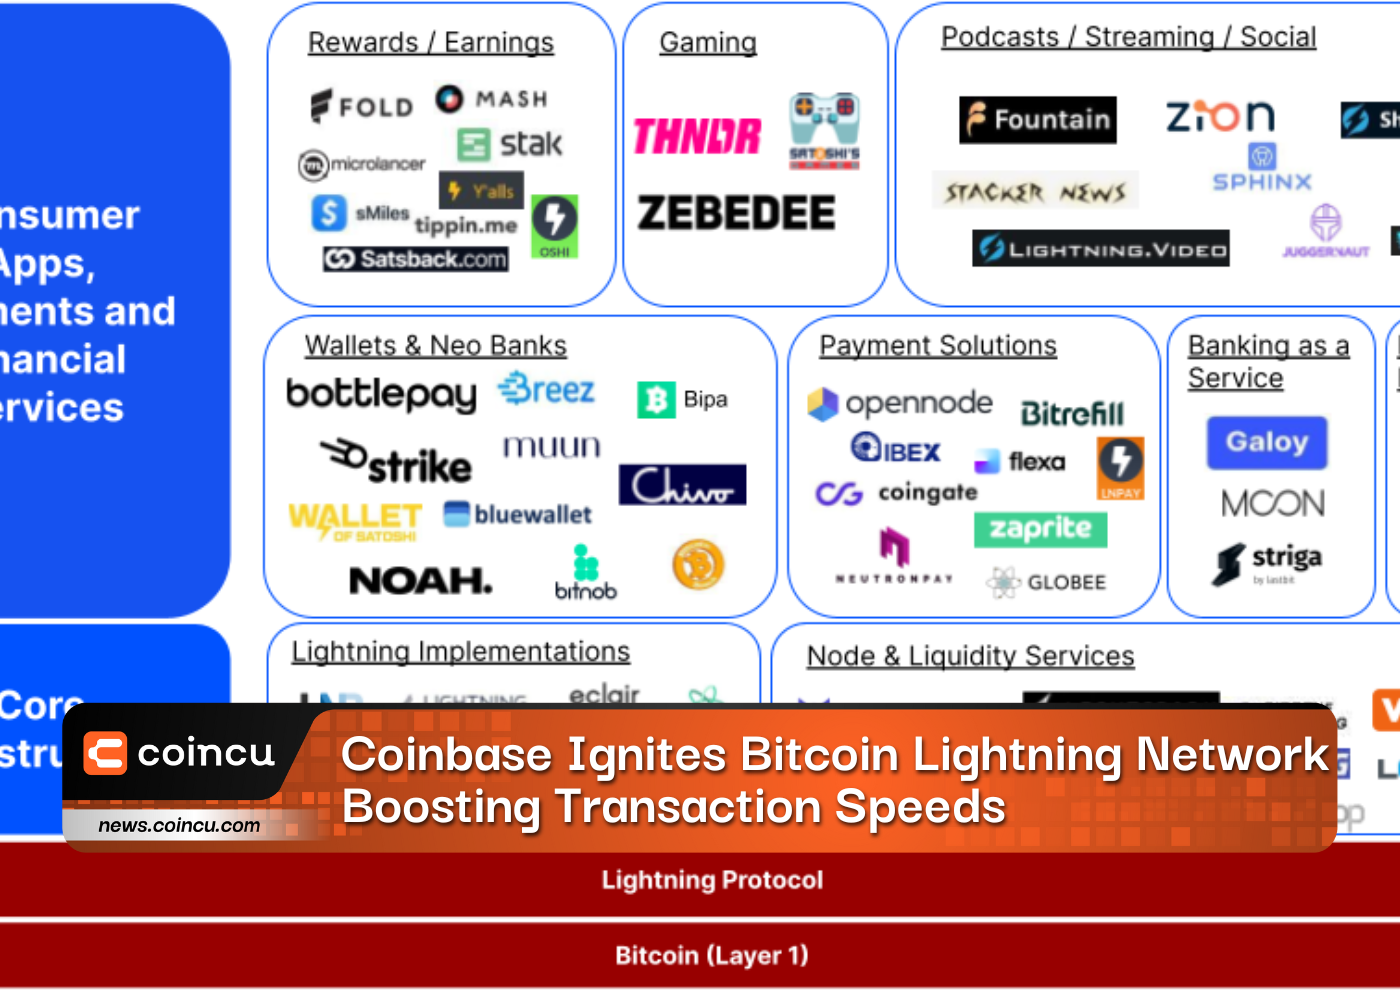 Coinbase Ignites Bitcoin Lightning Network